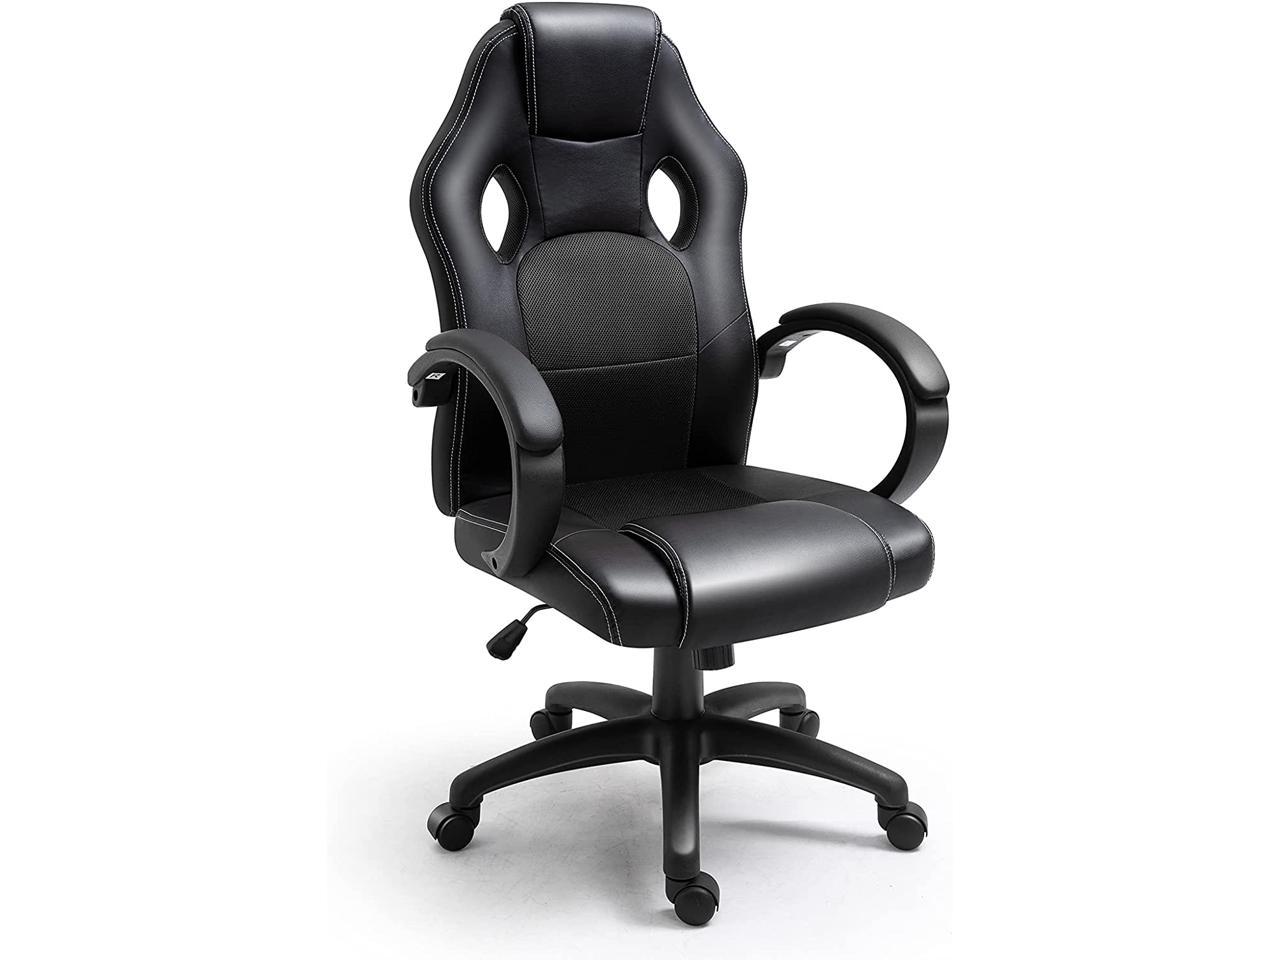 Office Chair PU Leather High Back Ergonomic Adjustable Racing Desk Chair Task Swivel Executive Computer Chair Black